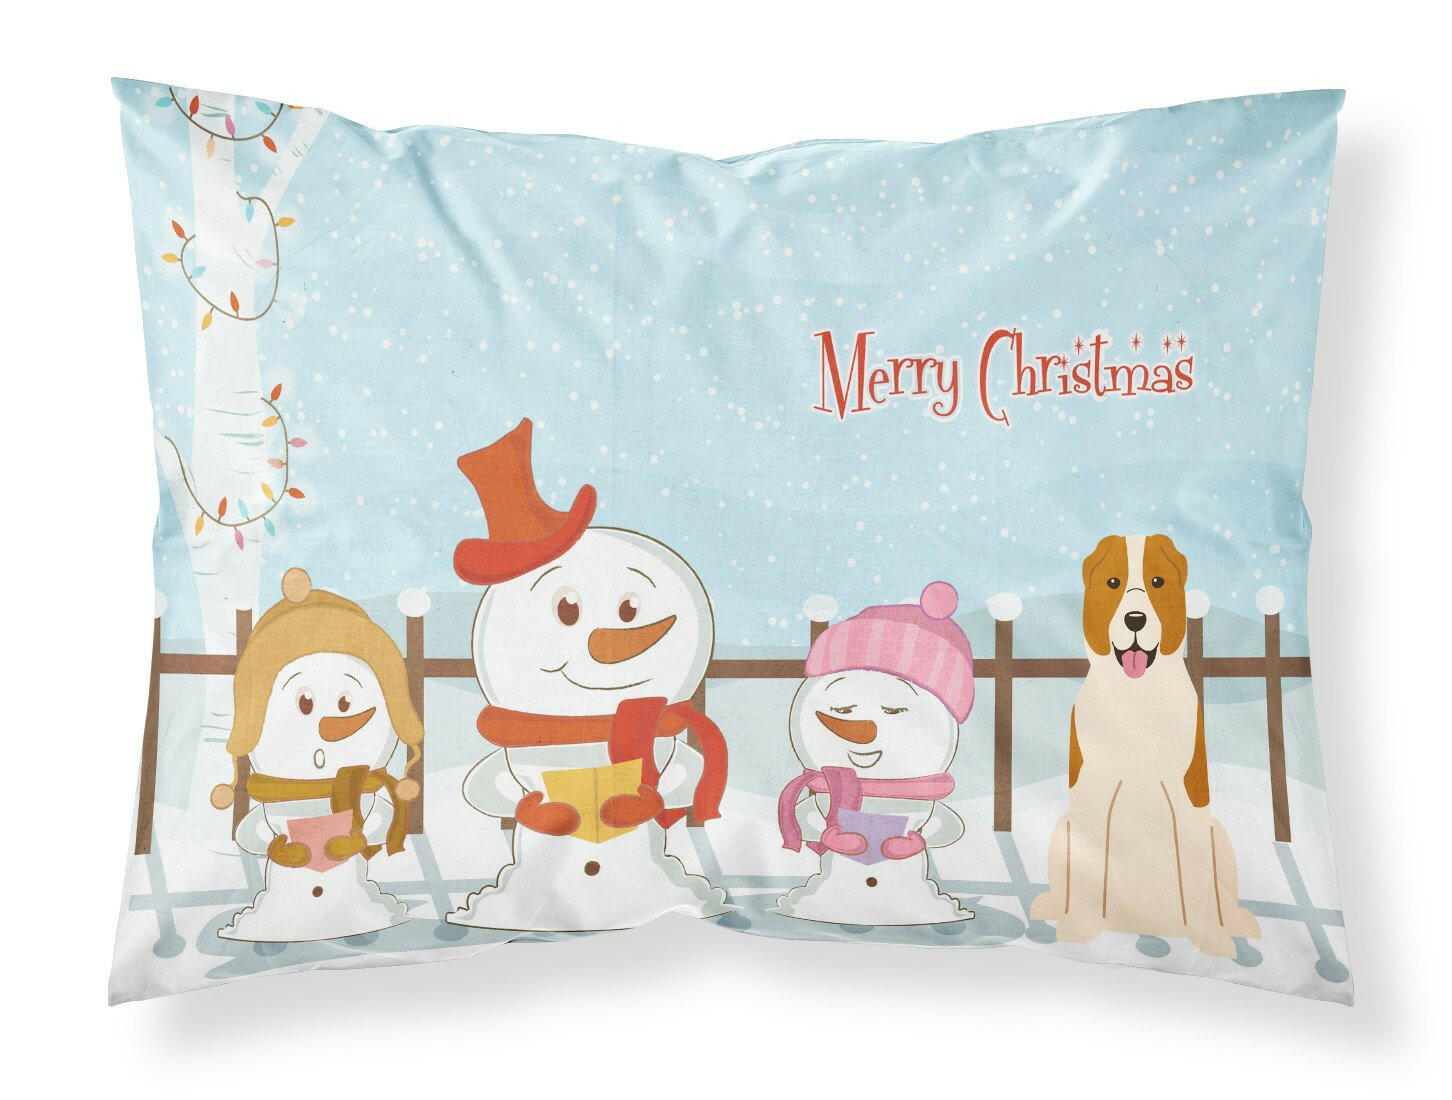 Merry Christmas Carolers Central Asian Shepherd Dog Fabric Standard Pillowcase BB2380PILLOWCASE by Caroline's Treasures